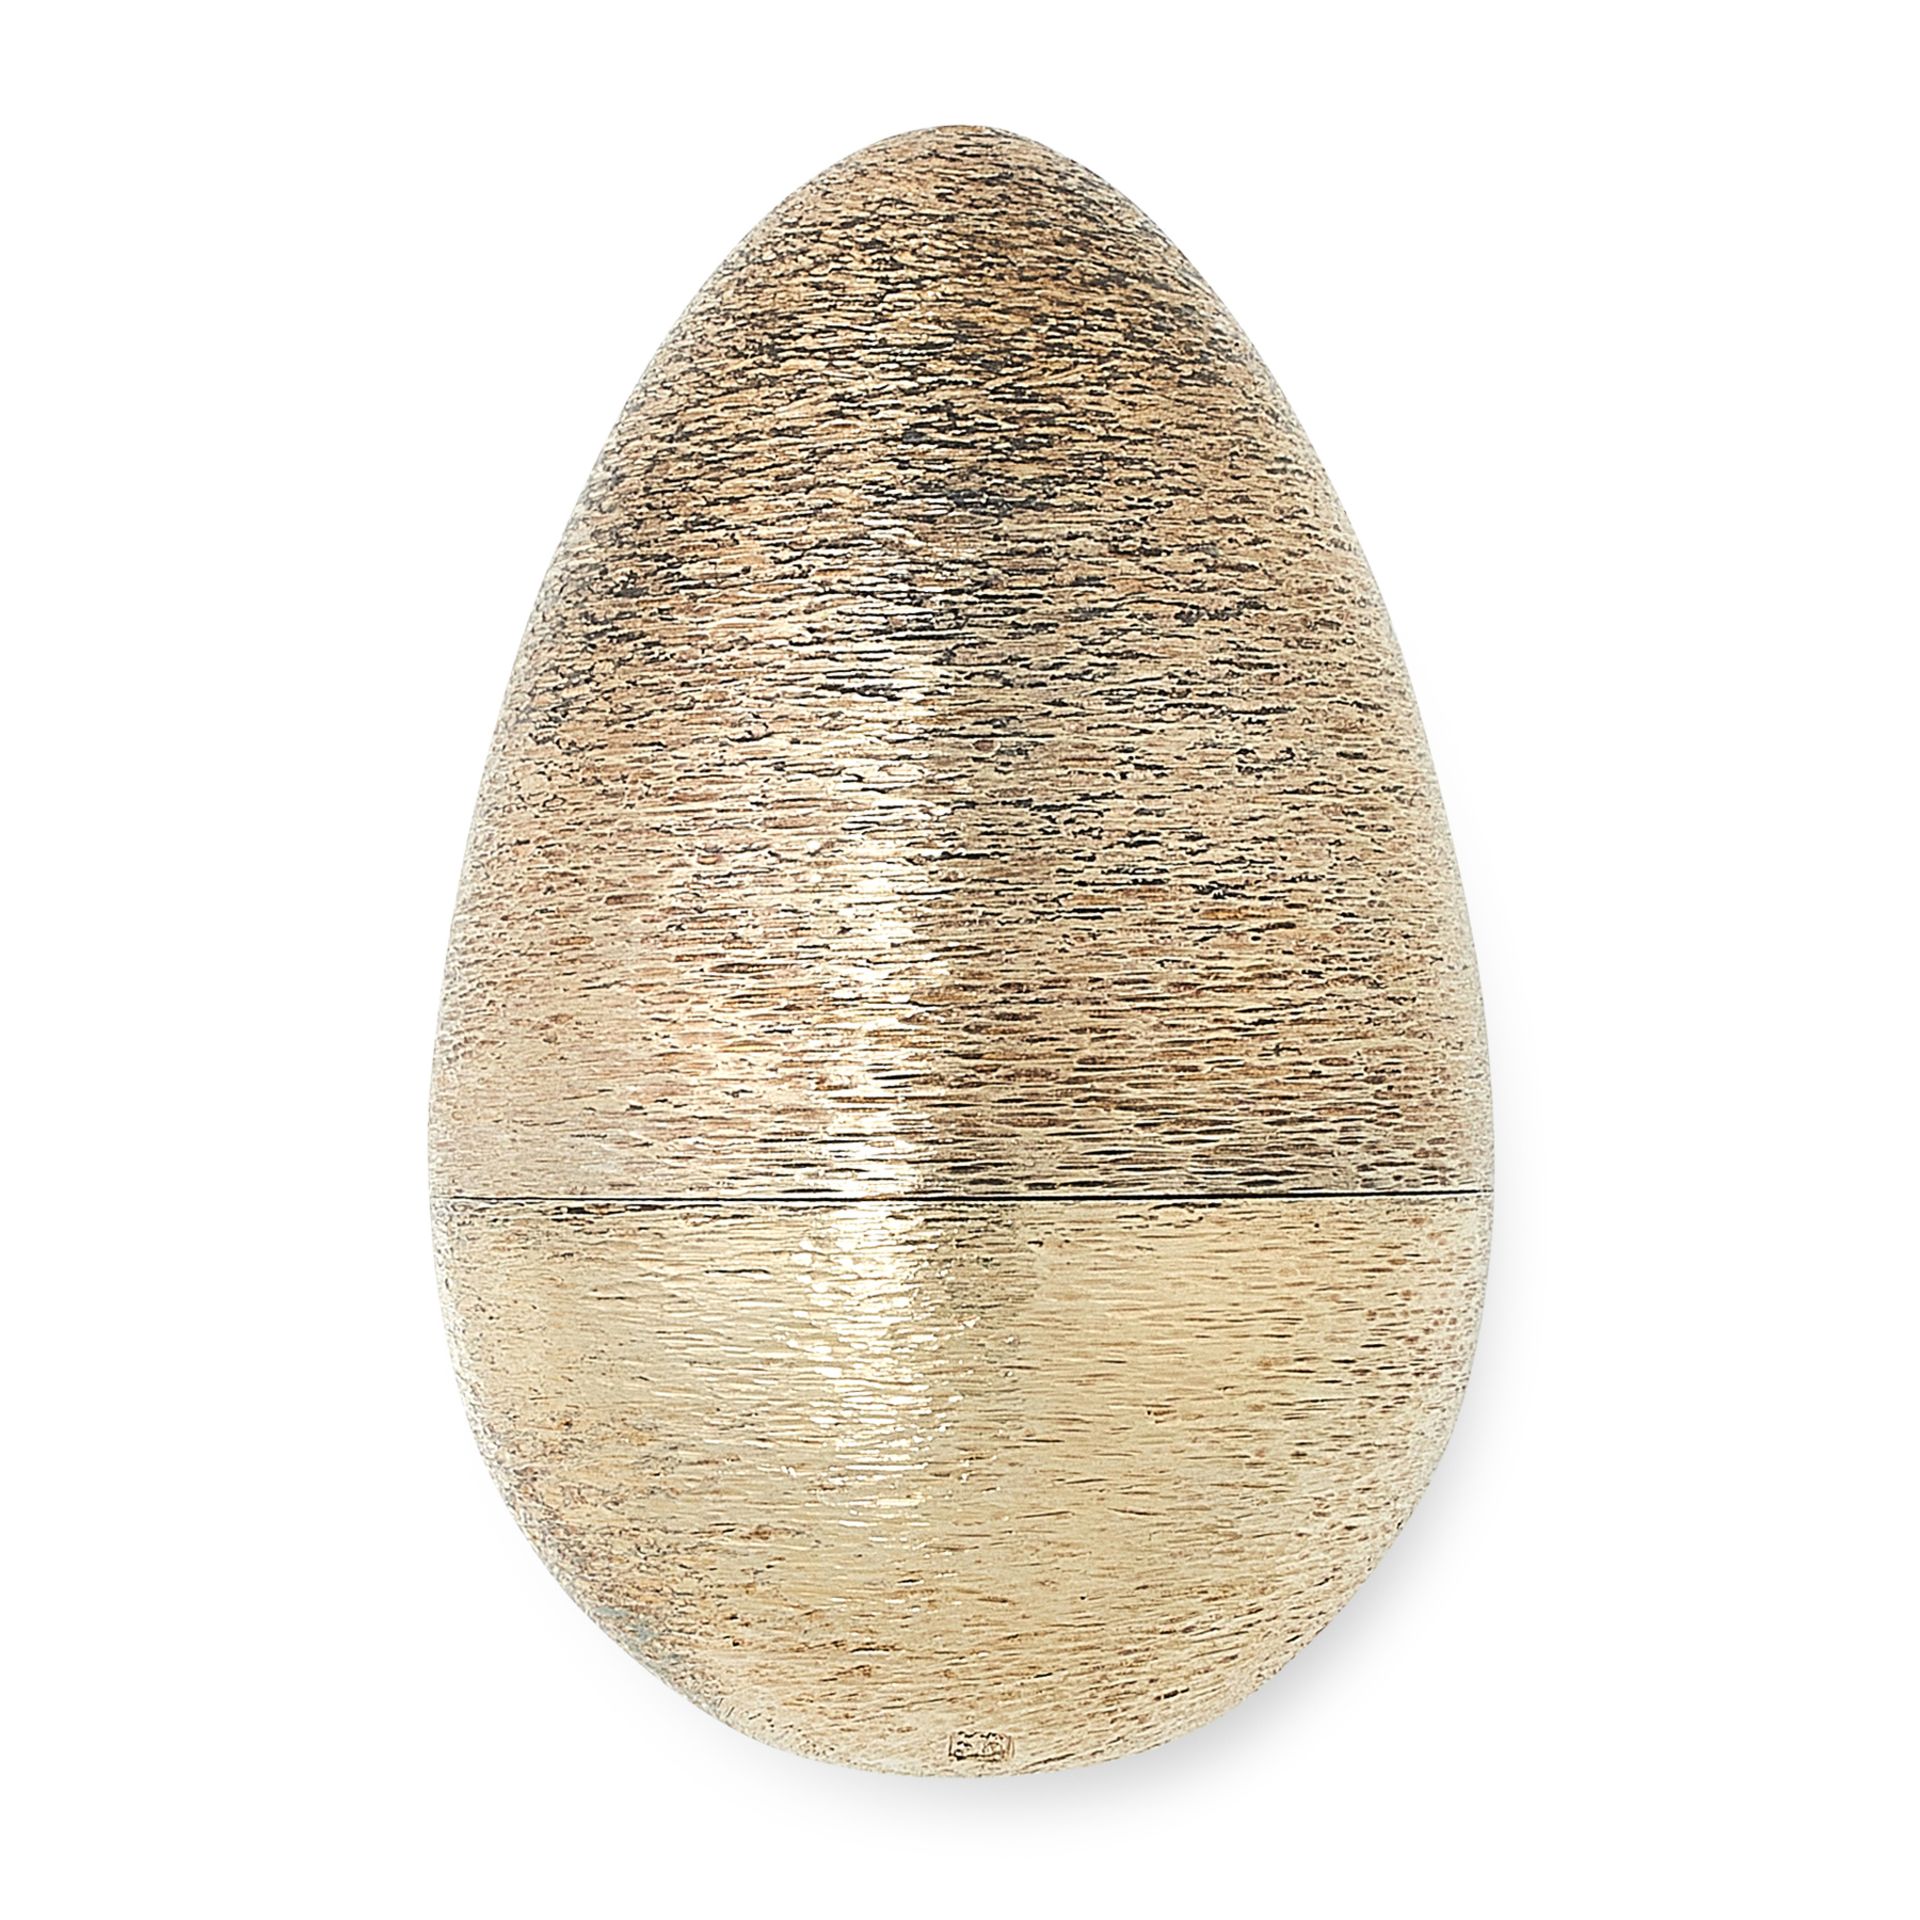 A VINTAGE ENAMEL SURPRISE EGG, STUART DEVLIN 1981 in silver, designed as an egg, the textured